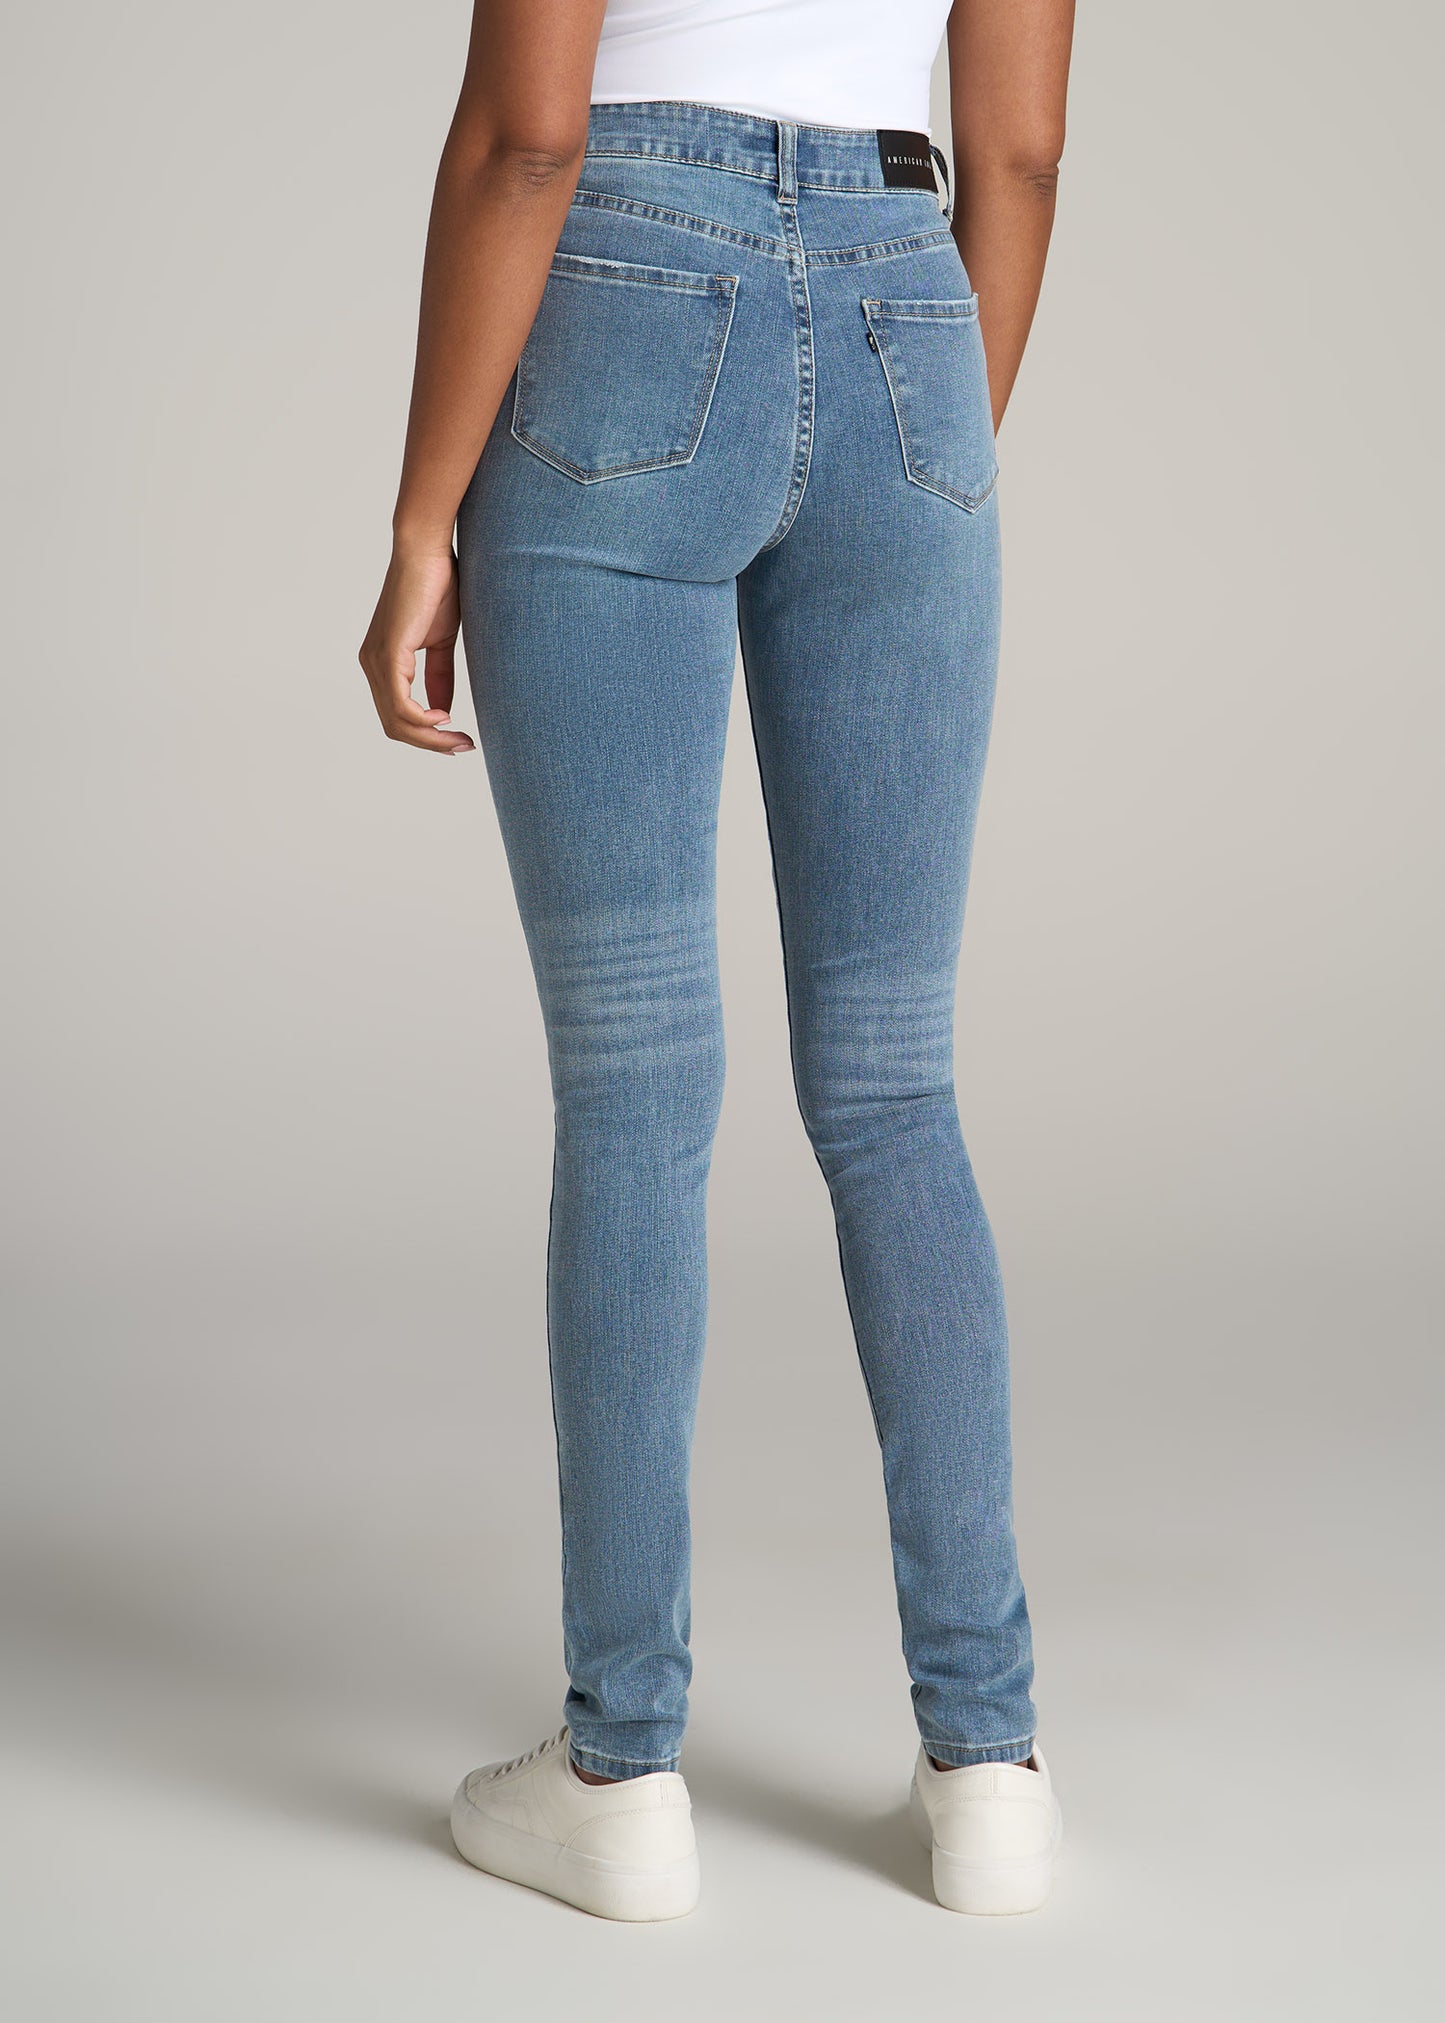 Tall Skinny Jeans Women's, Georgia High Rise